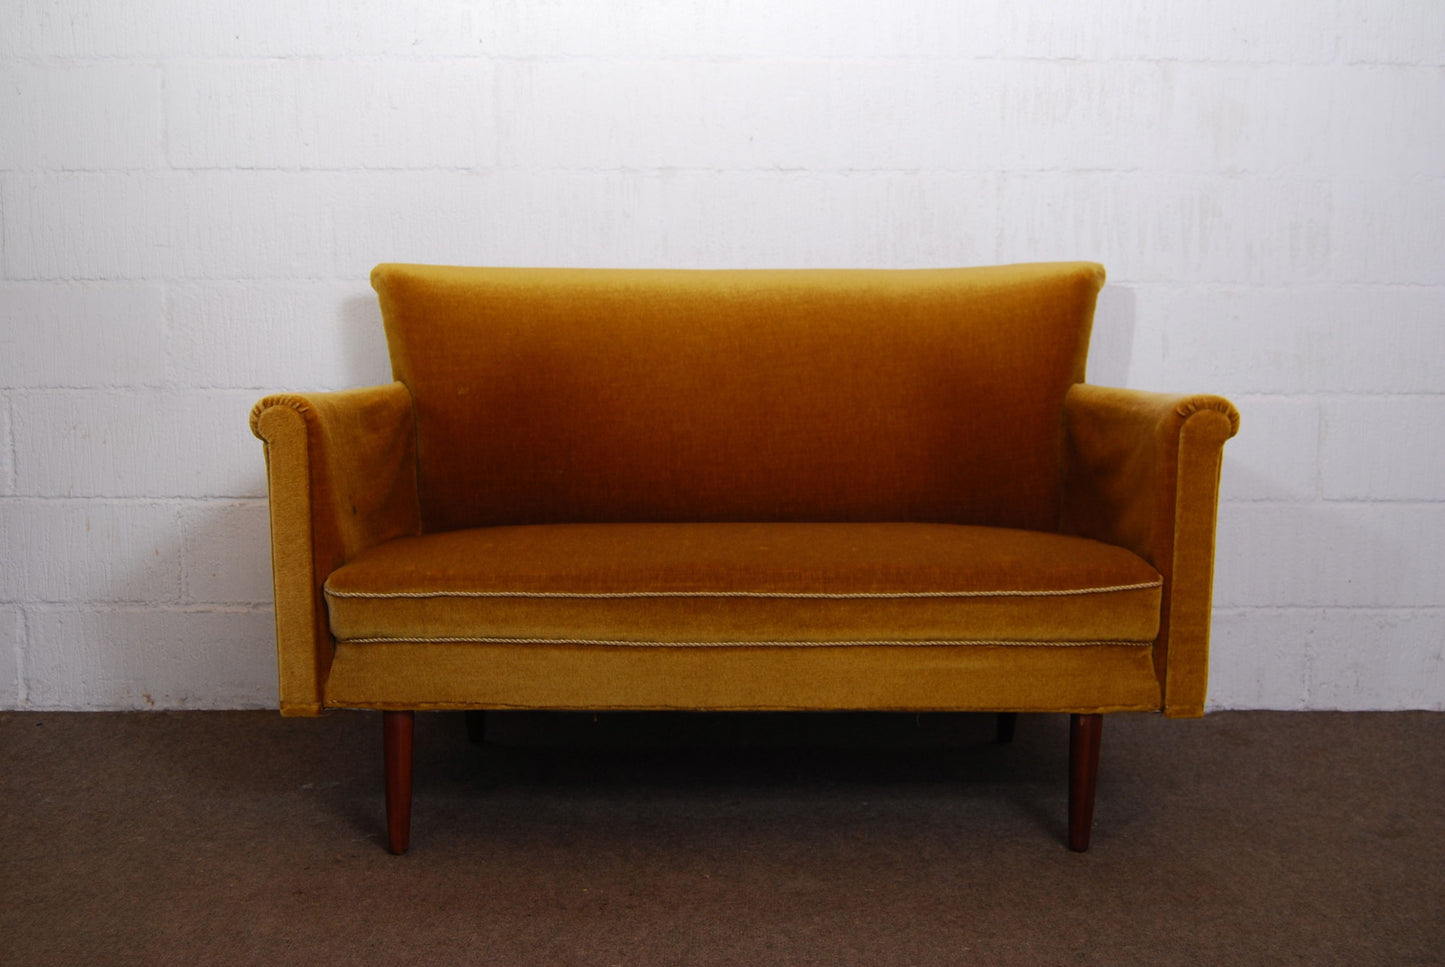 1950s two seat sofa